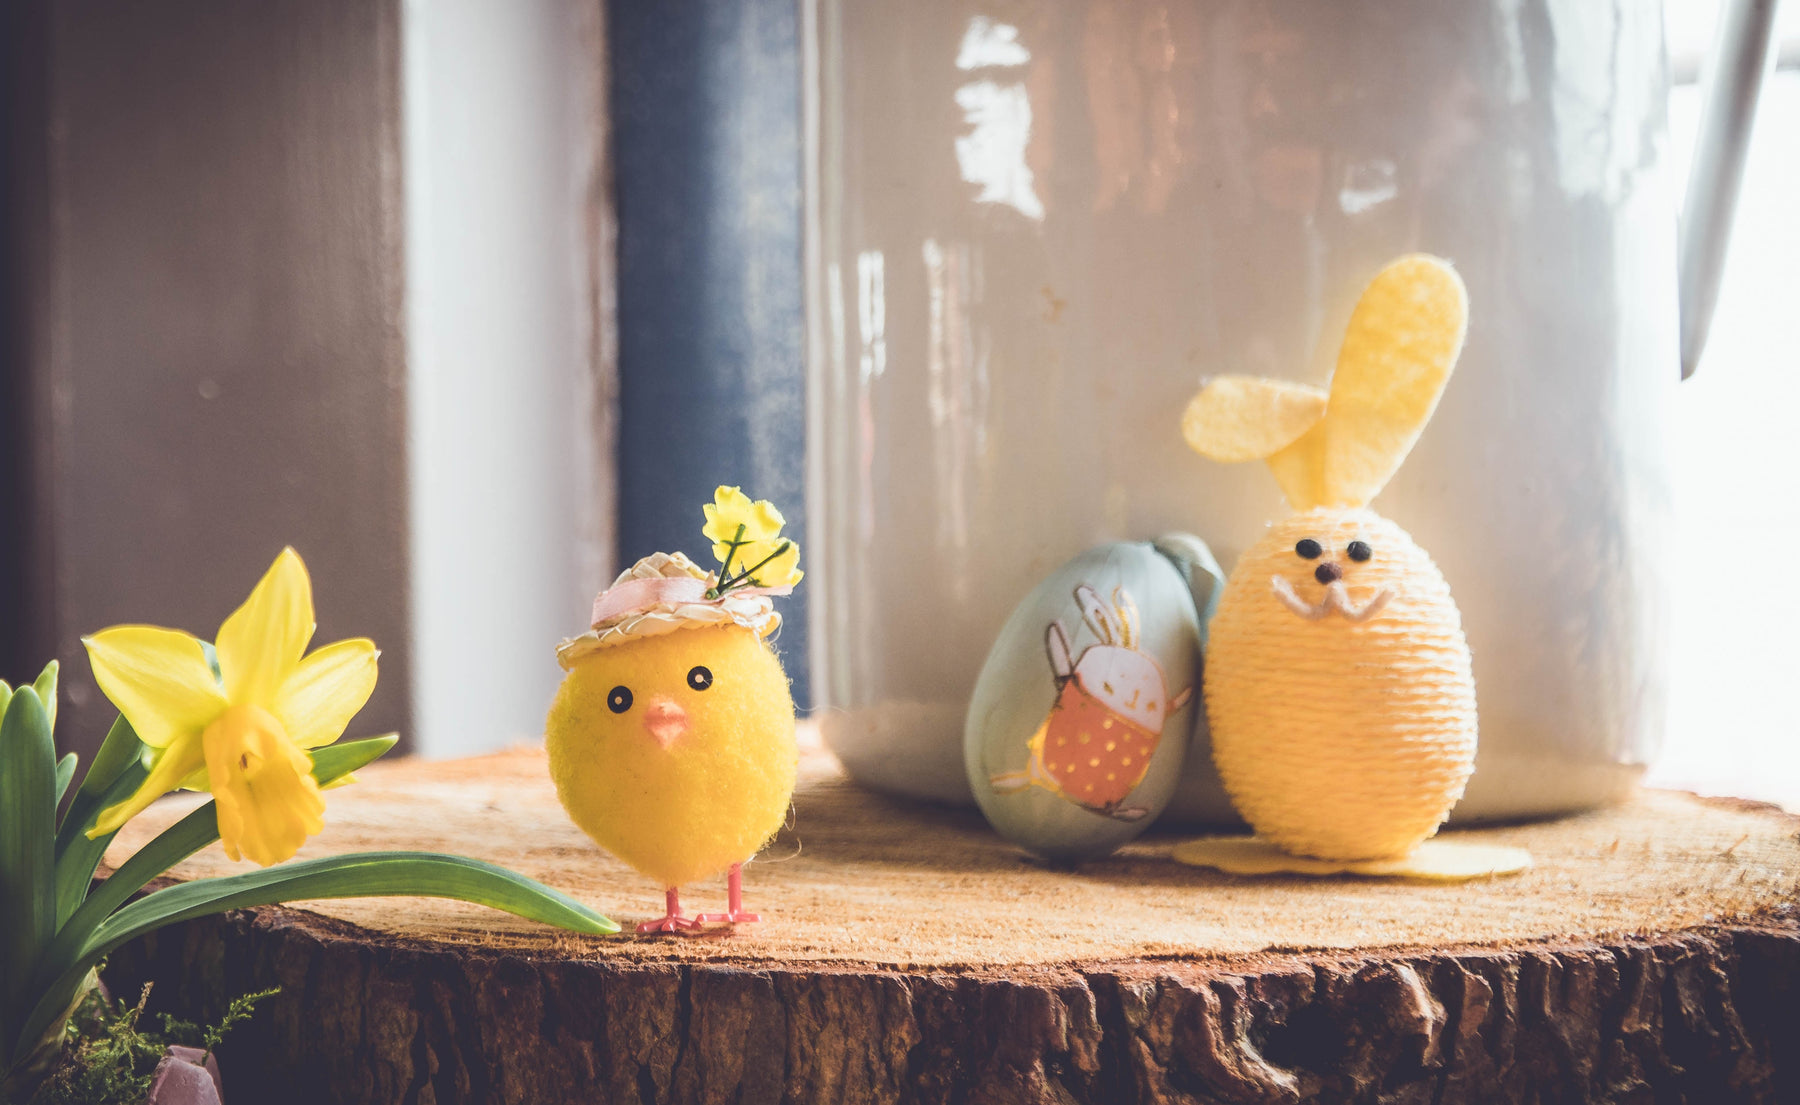 Celebrating Easter with Delune: Uplifting Essential Oils for a Joyful Easter Sunday